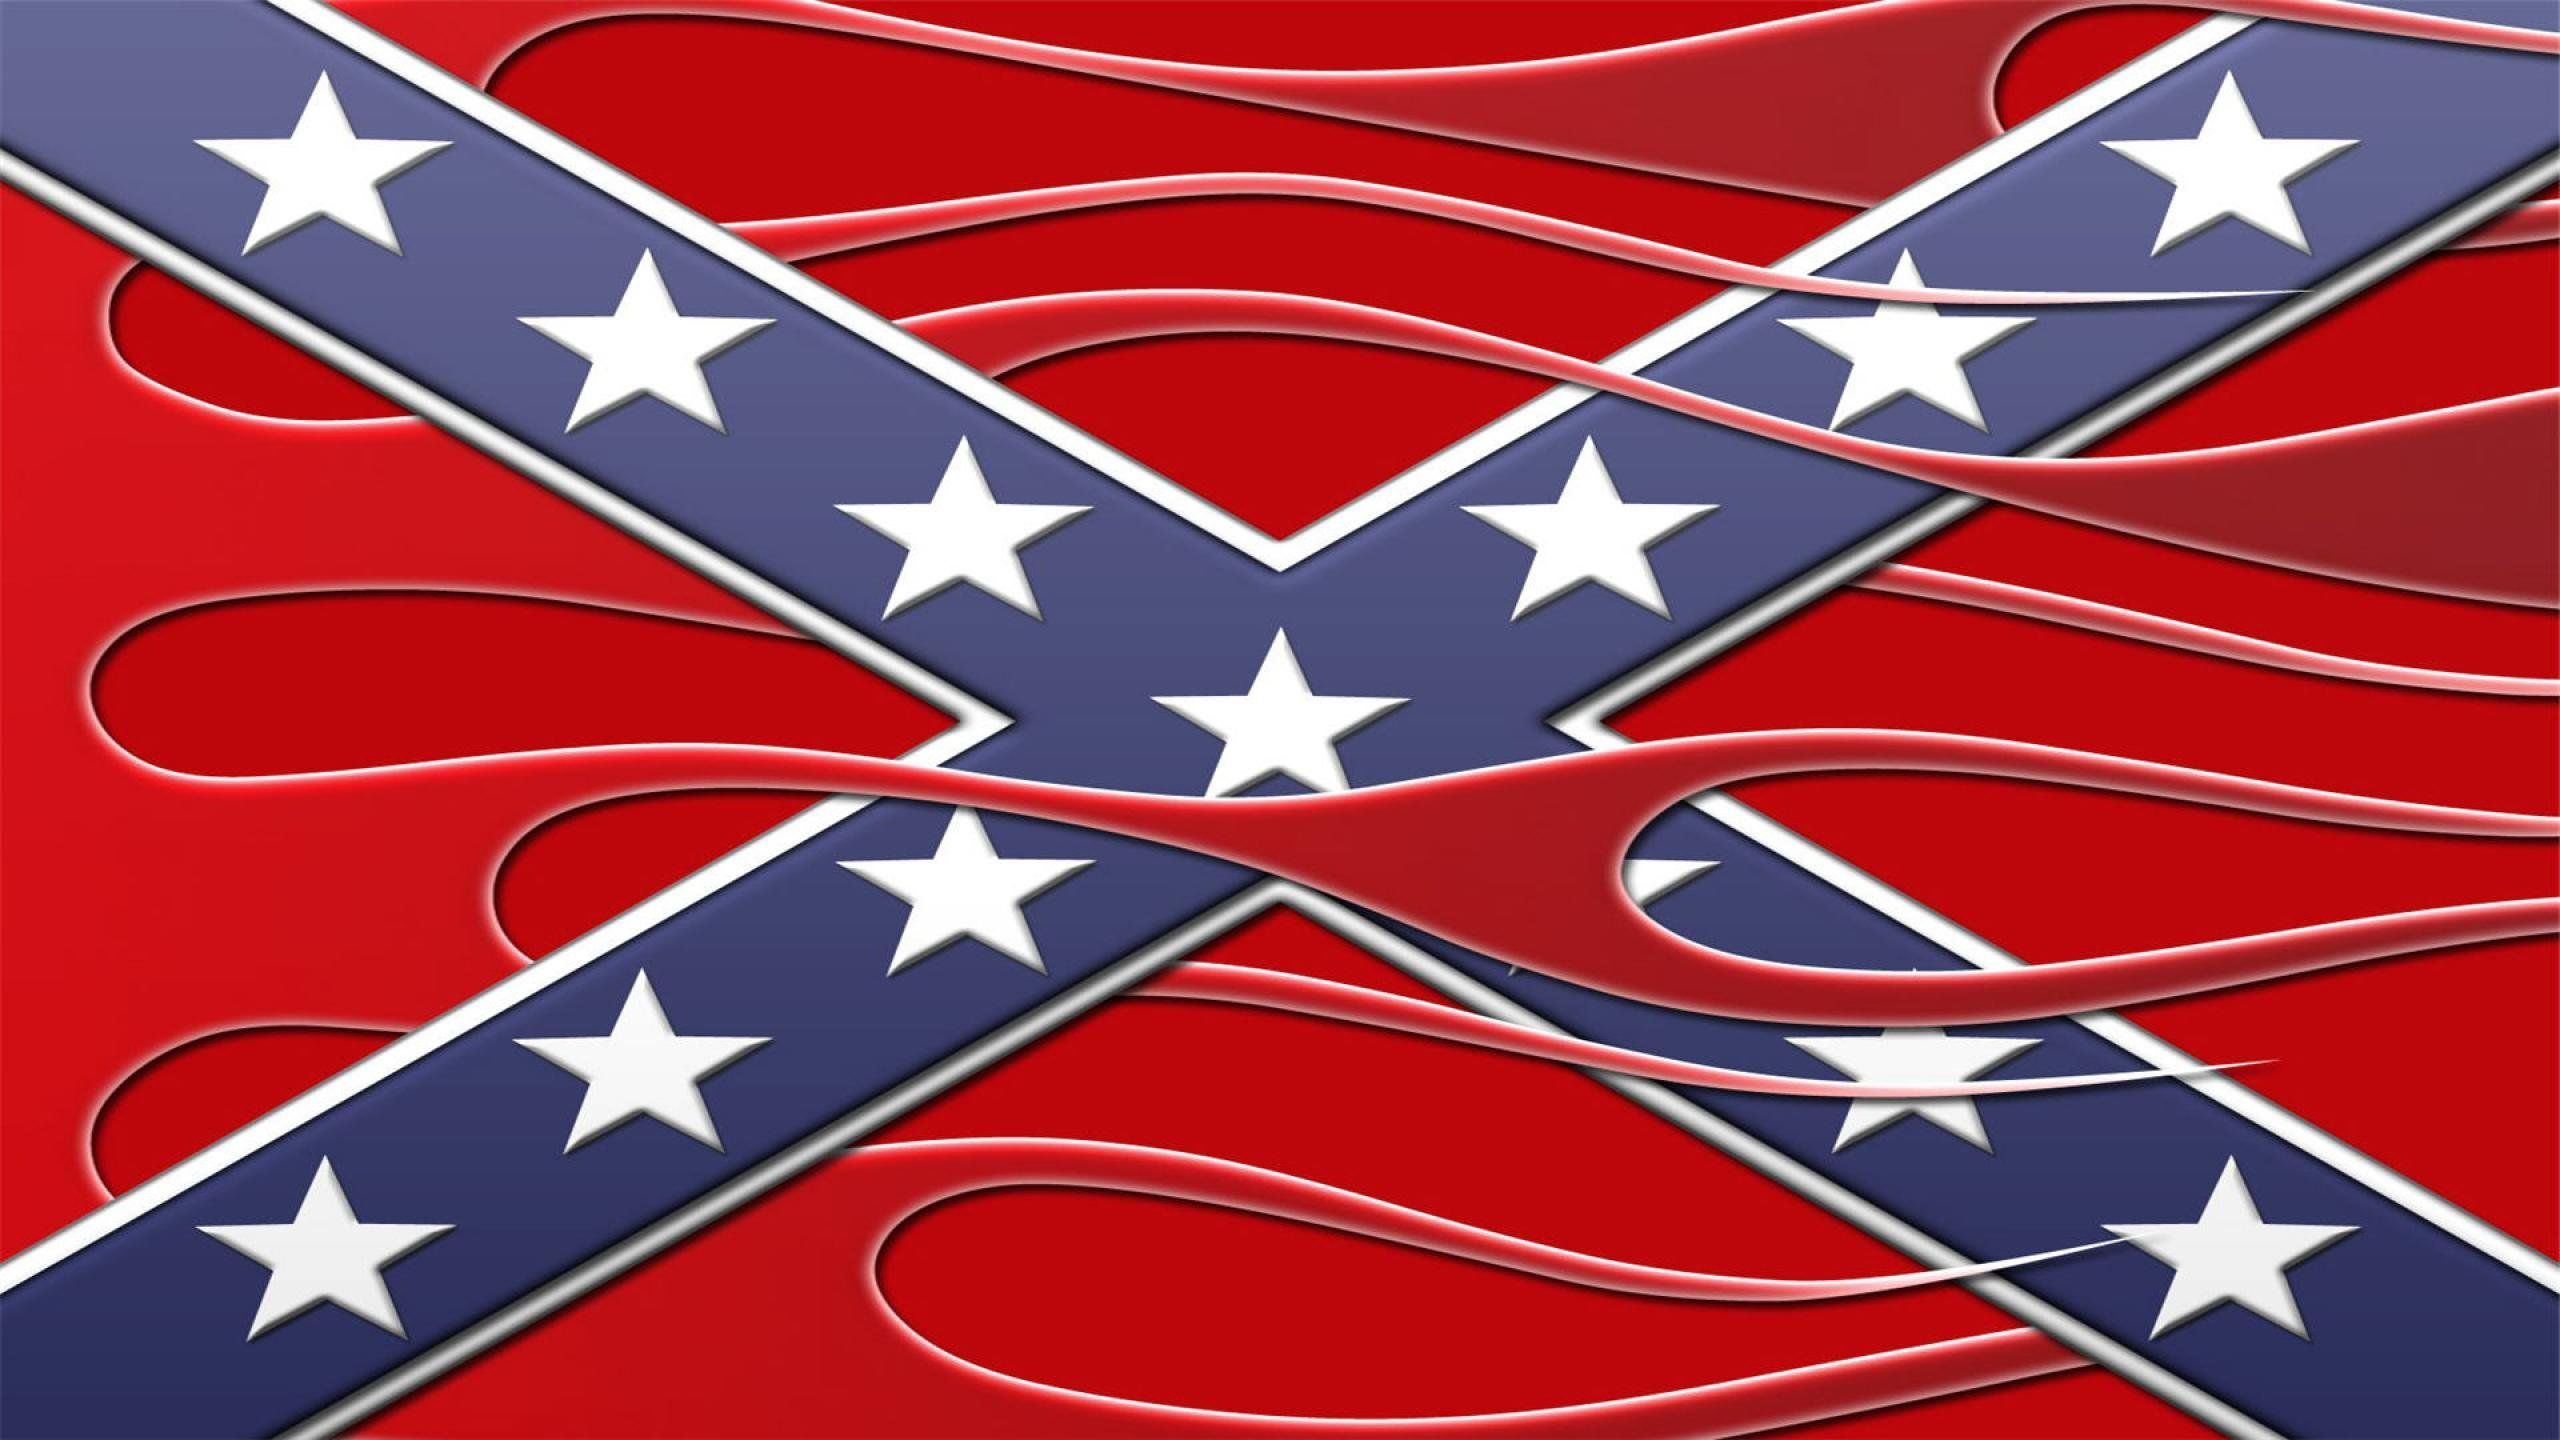 CONFEDERATE flag usa america united states csa civil war rebel